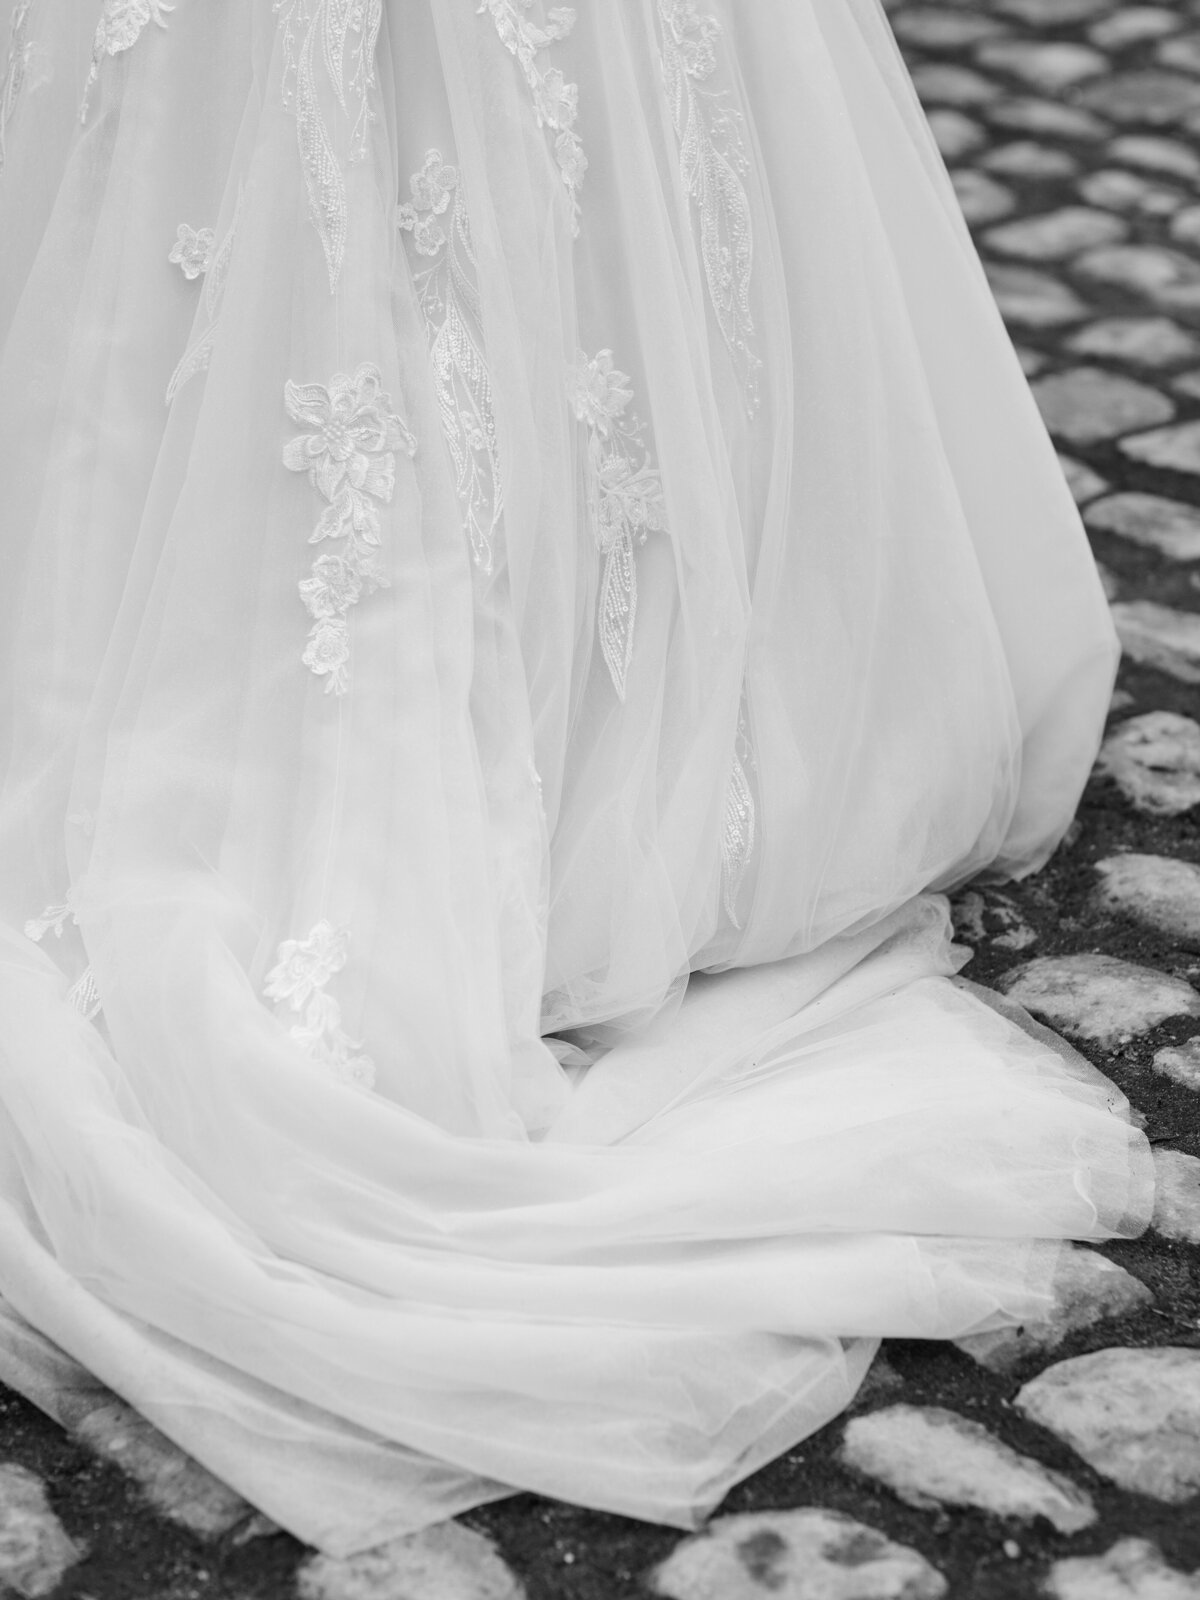 136-10072021-_81A3126-Olivia-Poncelet-Wedding-Photographer-Belgium-Chateau-de-Ruisbroek-Chloe-Pieter-WEB-72